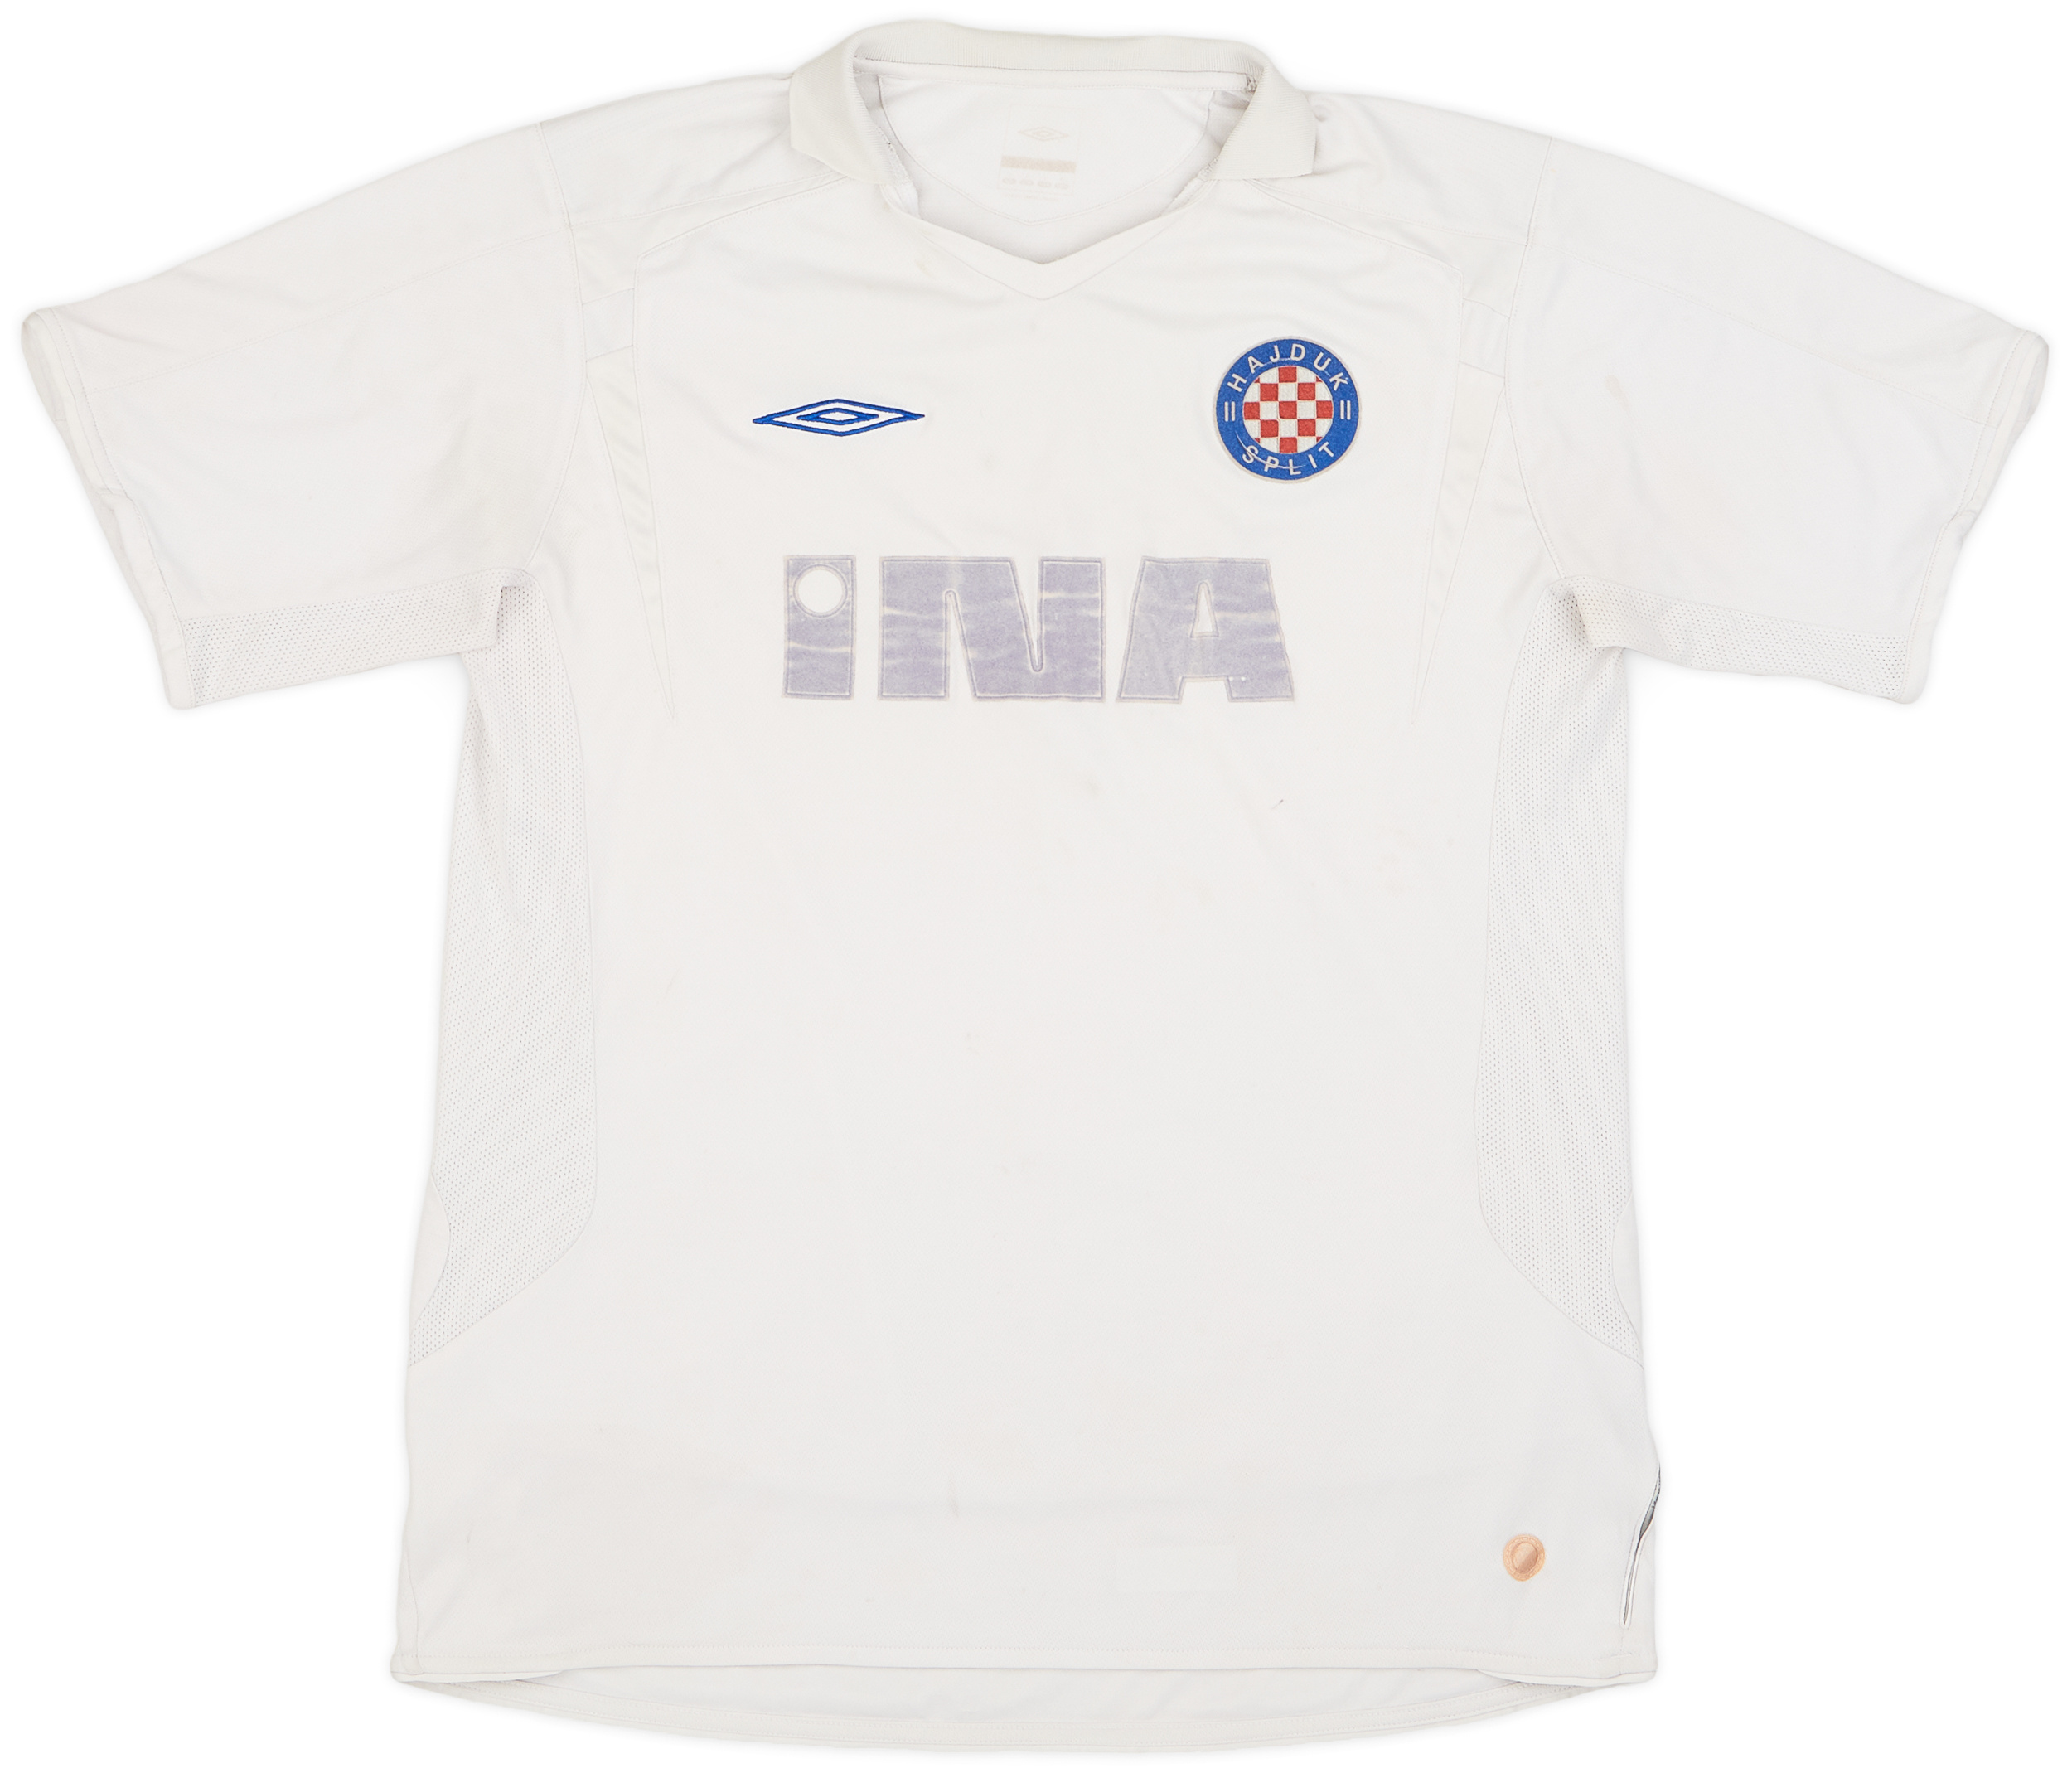 Hajduk Split  home shirt  (Original)